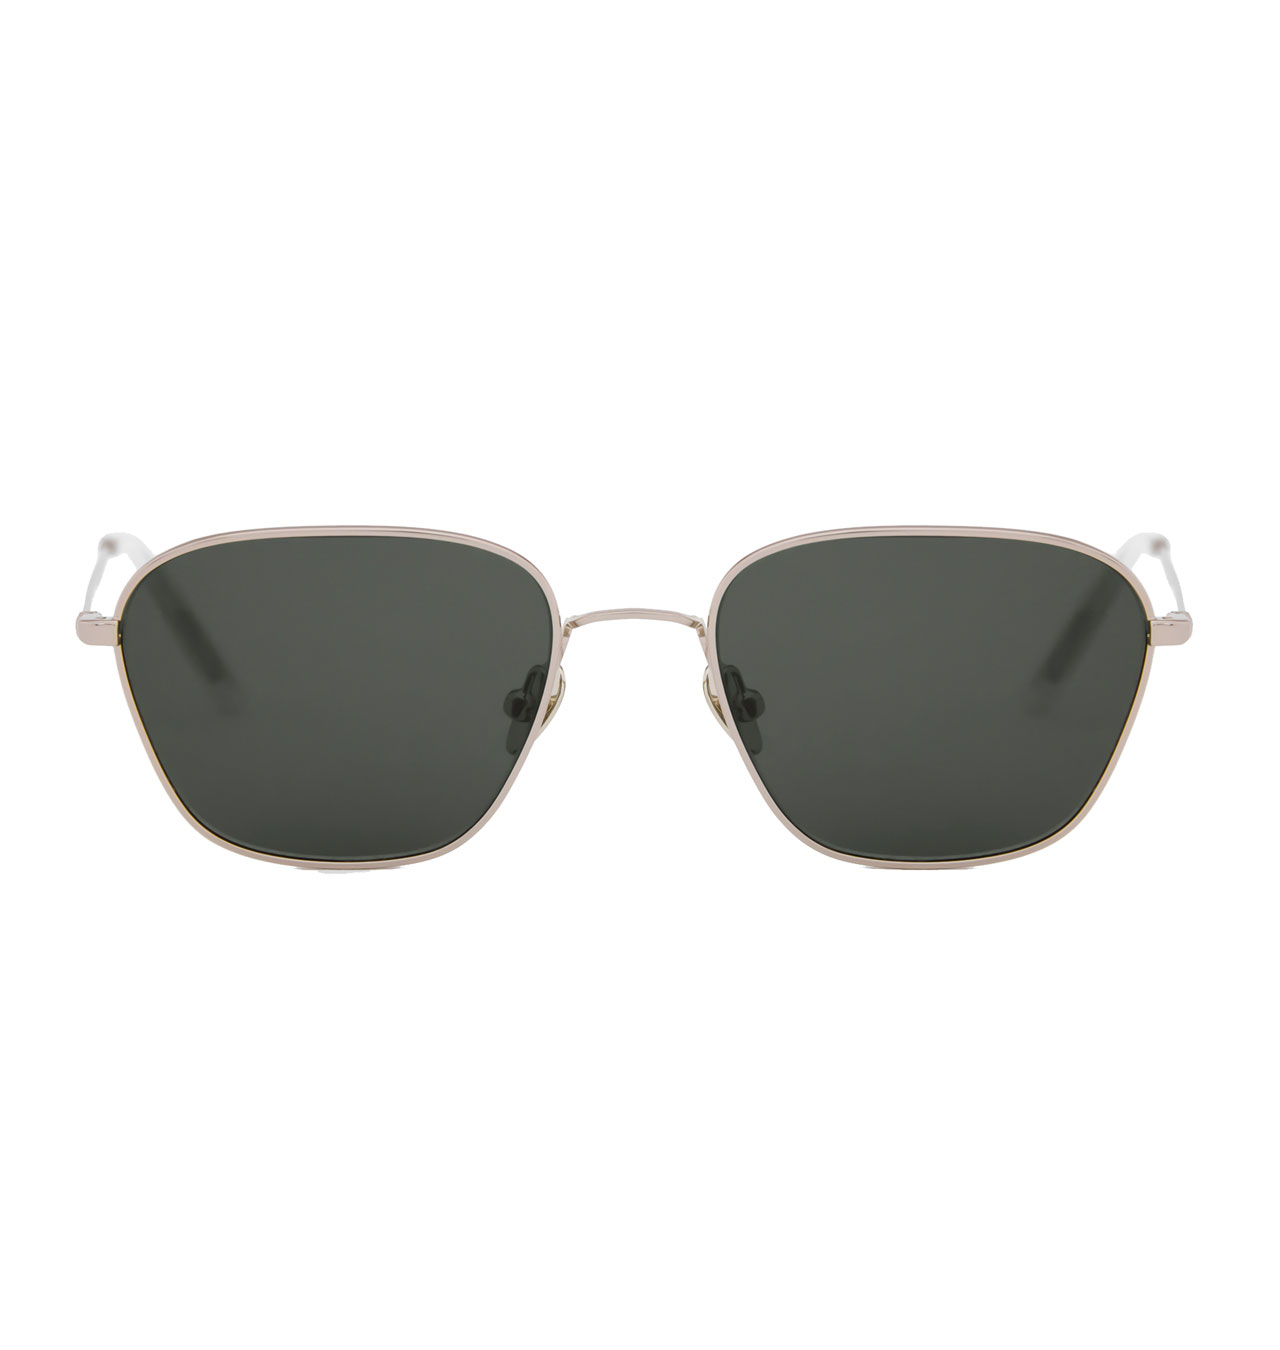 Monokel Eyewear - Otis Gold Sunglasses - Green Solid Lens